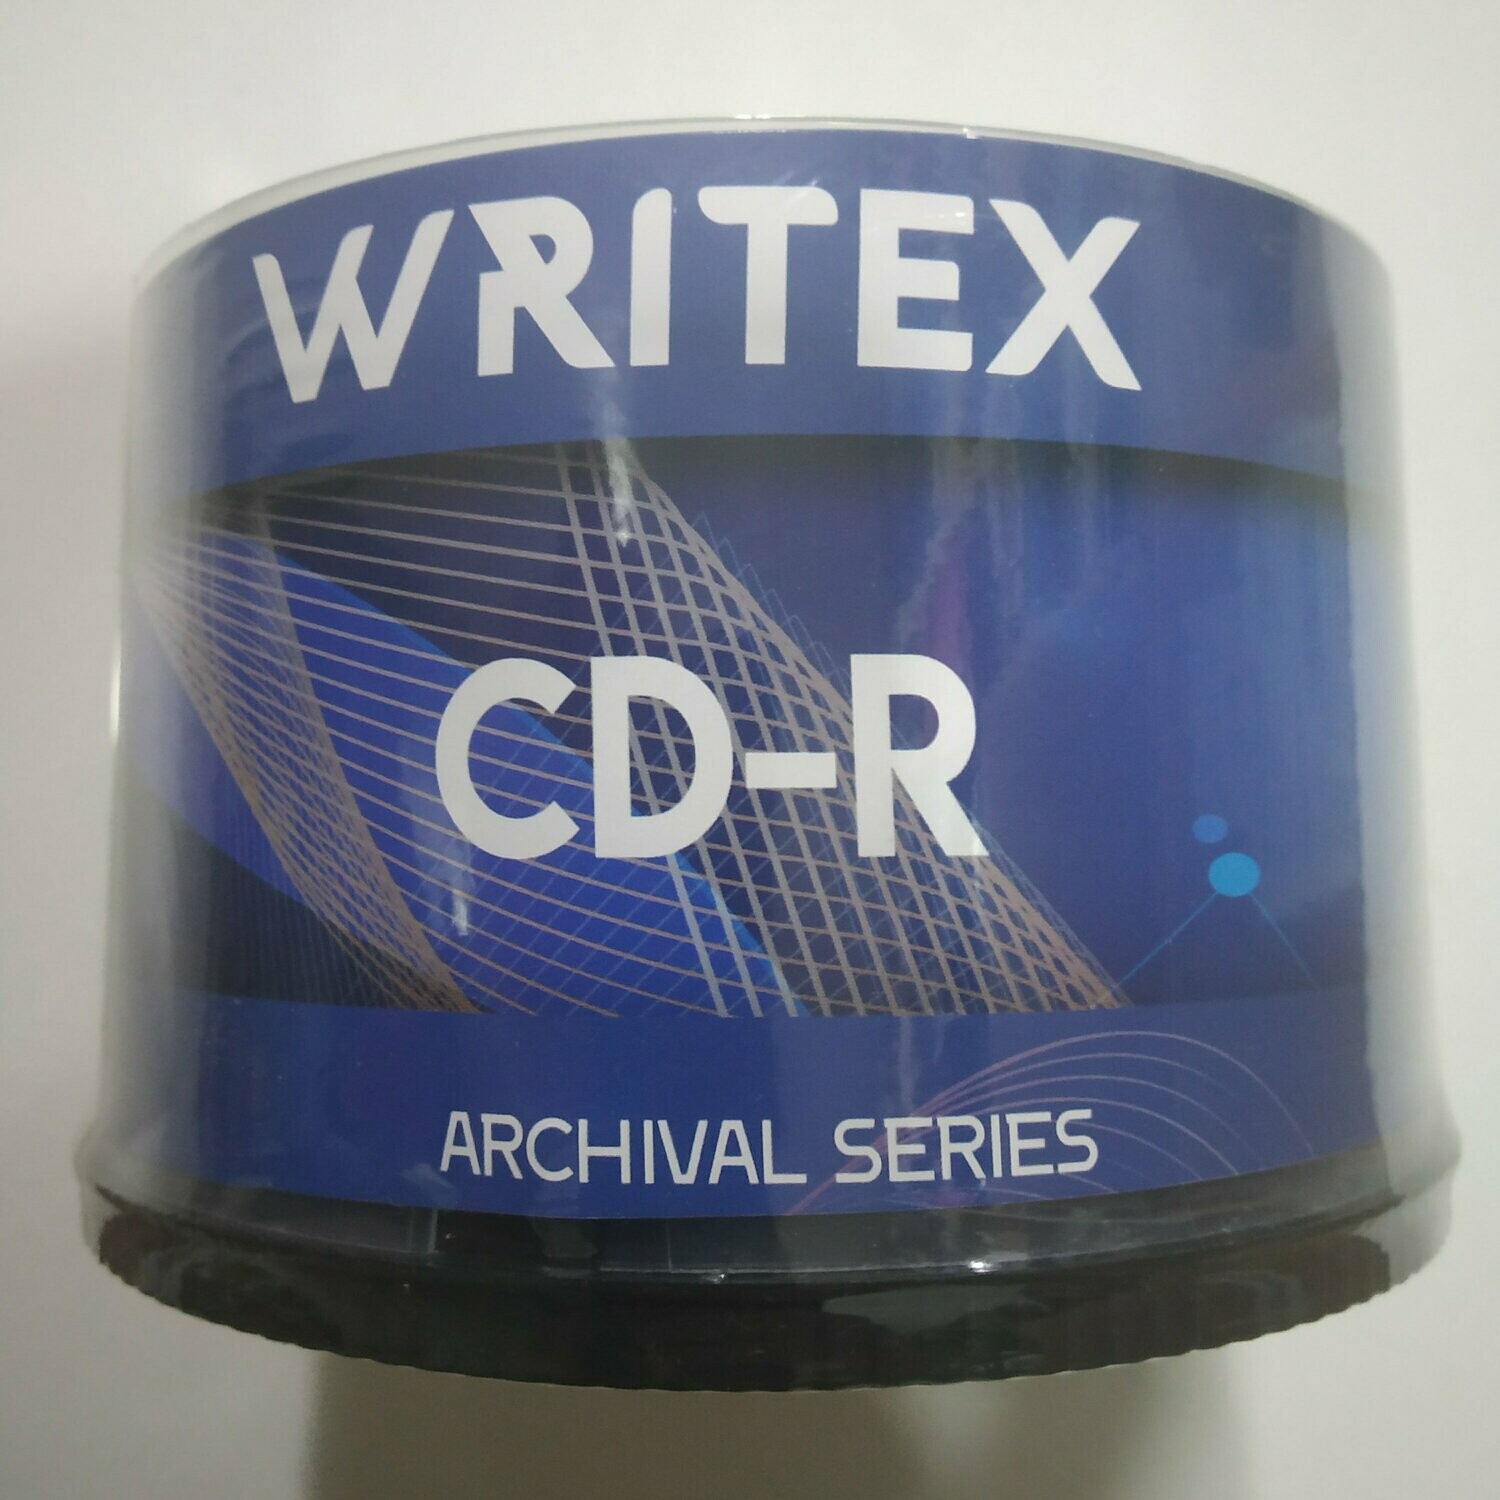 Writex Blank CD-R, Archival Series, Pack of 50-disk